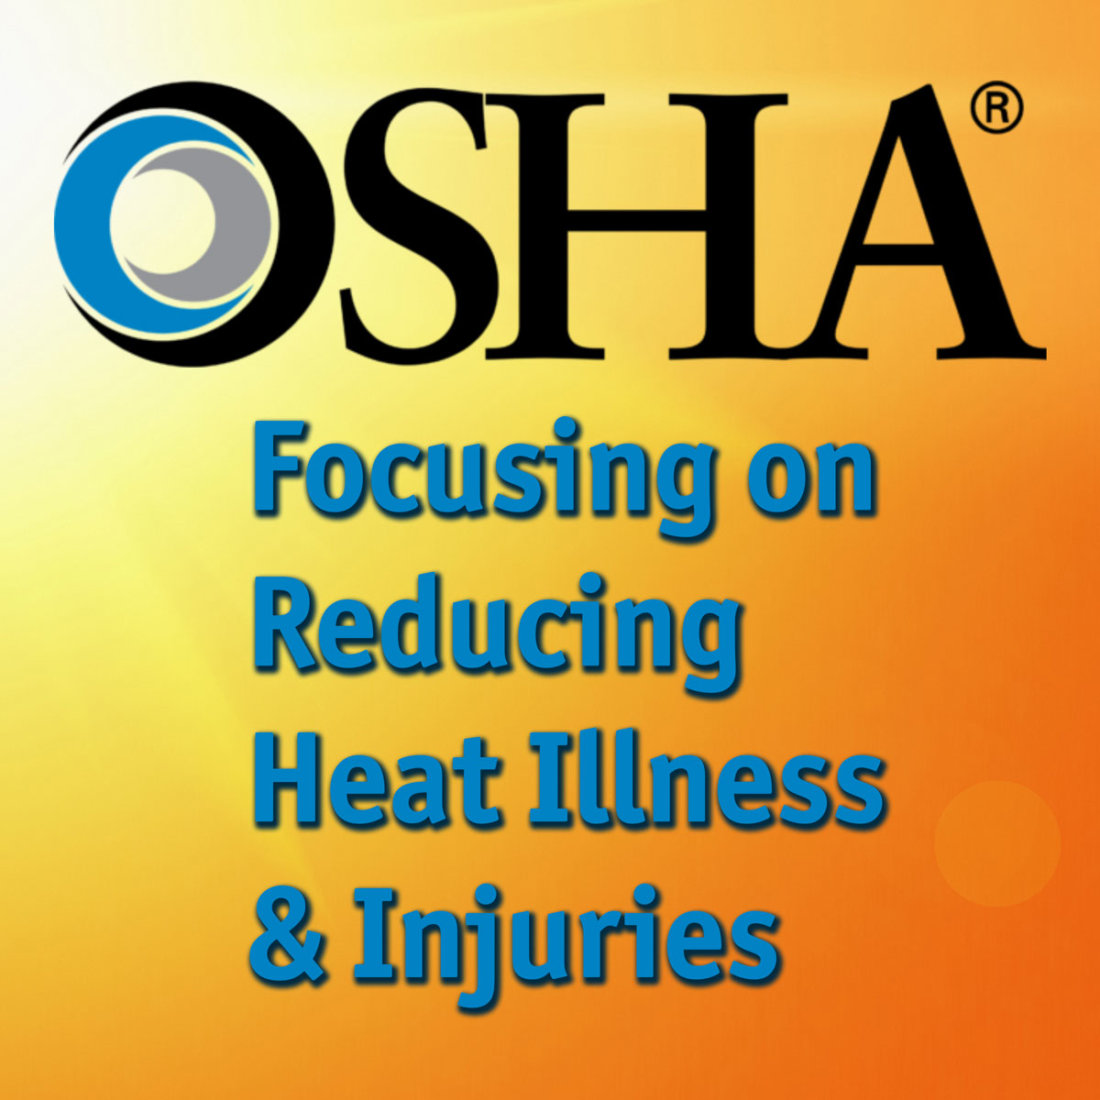 OSHA-Focusing-on-Reducing-Heat-Illness-and-Injuries